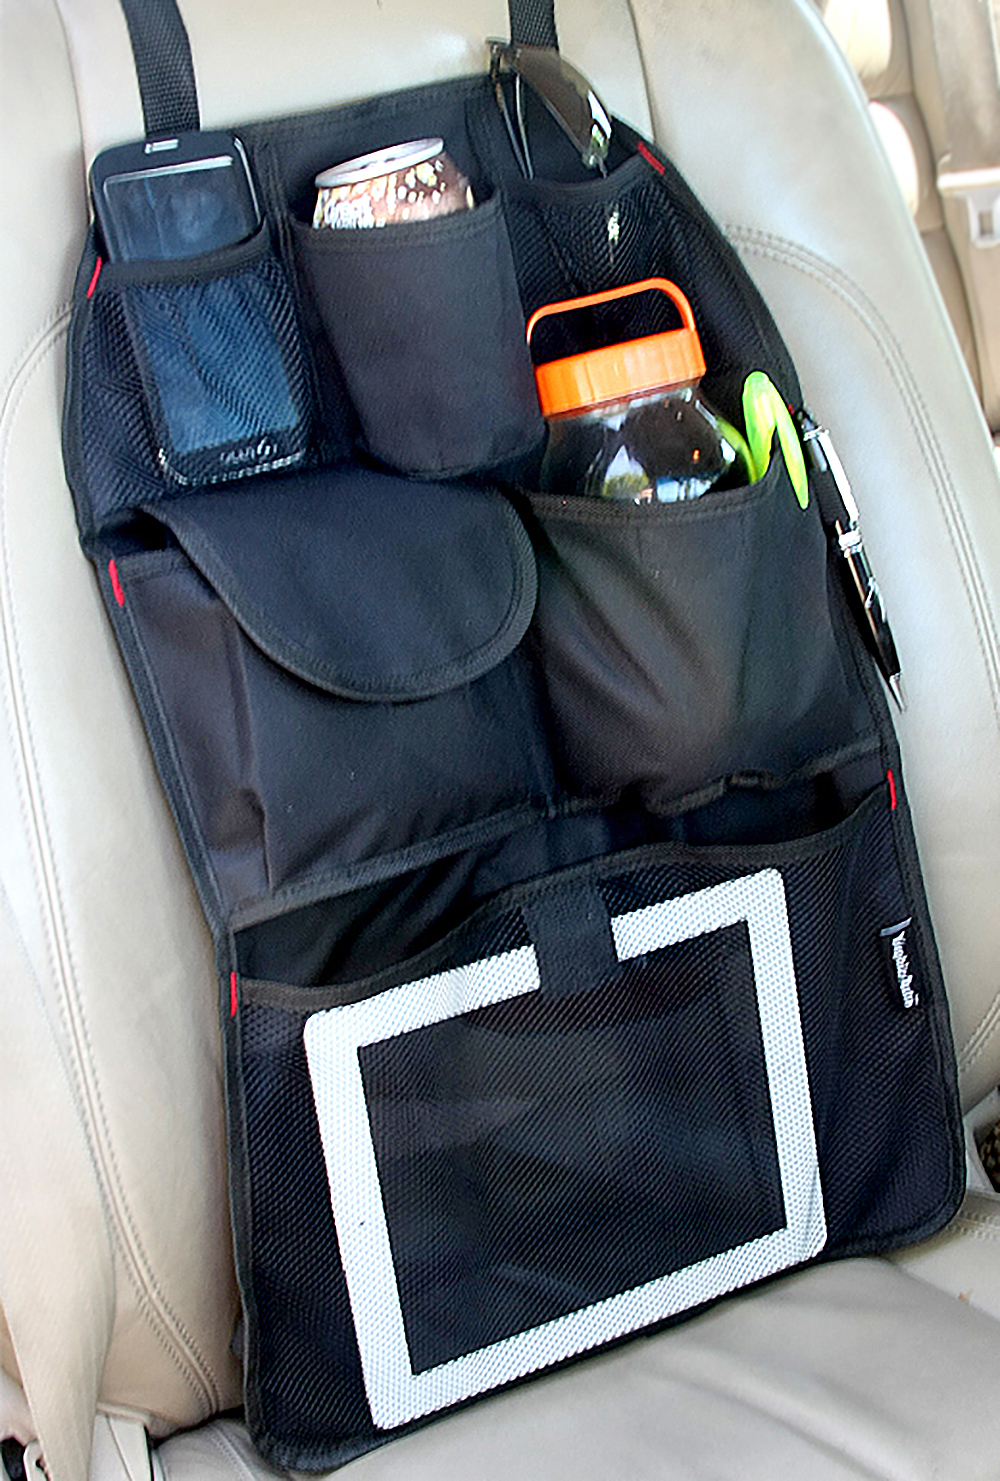 YupbizAuto Car Auto Front/Back Seat Organizer Cell Phone Holder Multi-Pocket Travel Storage Bag, Black Color - image 5 of 6